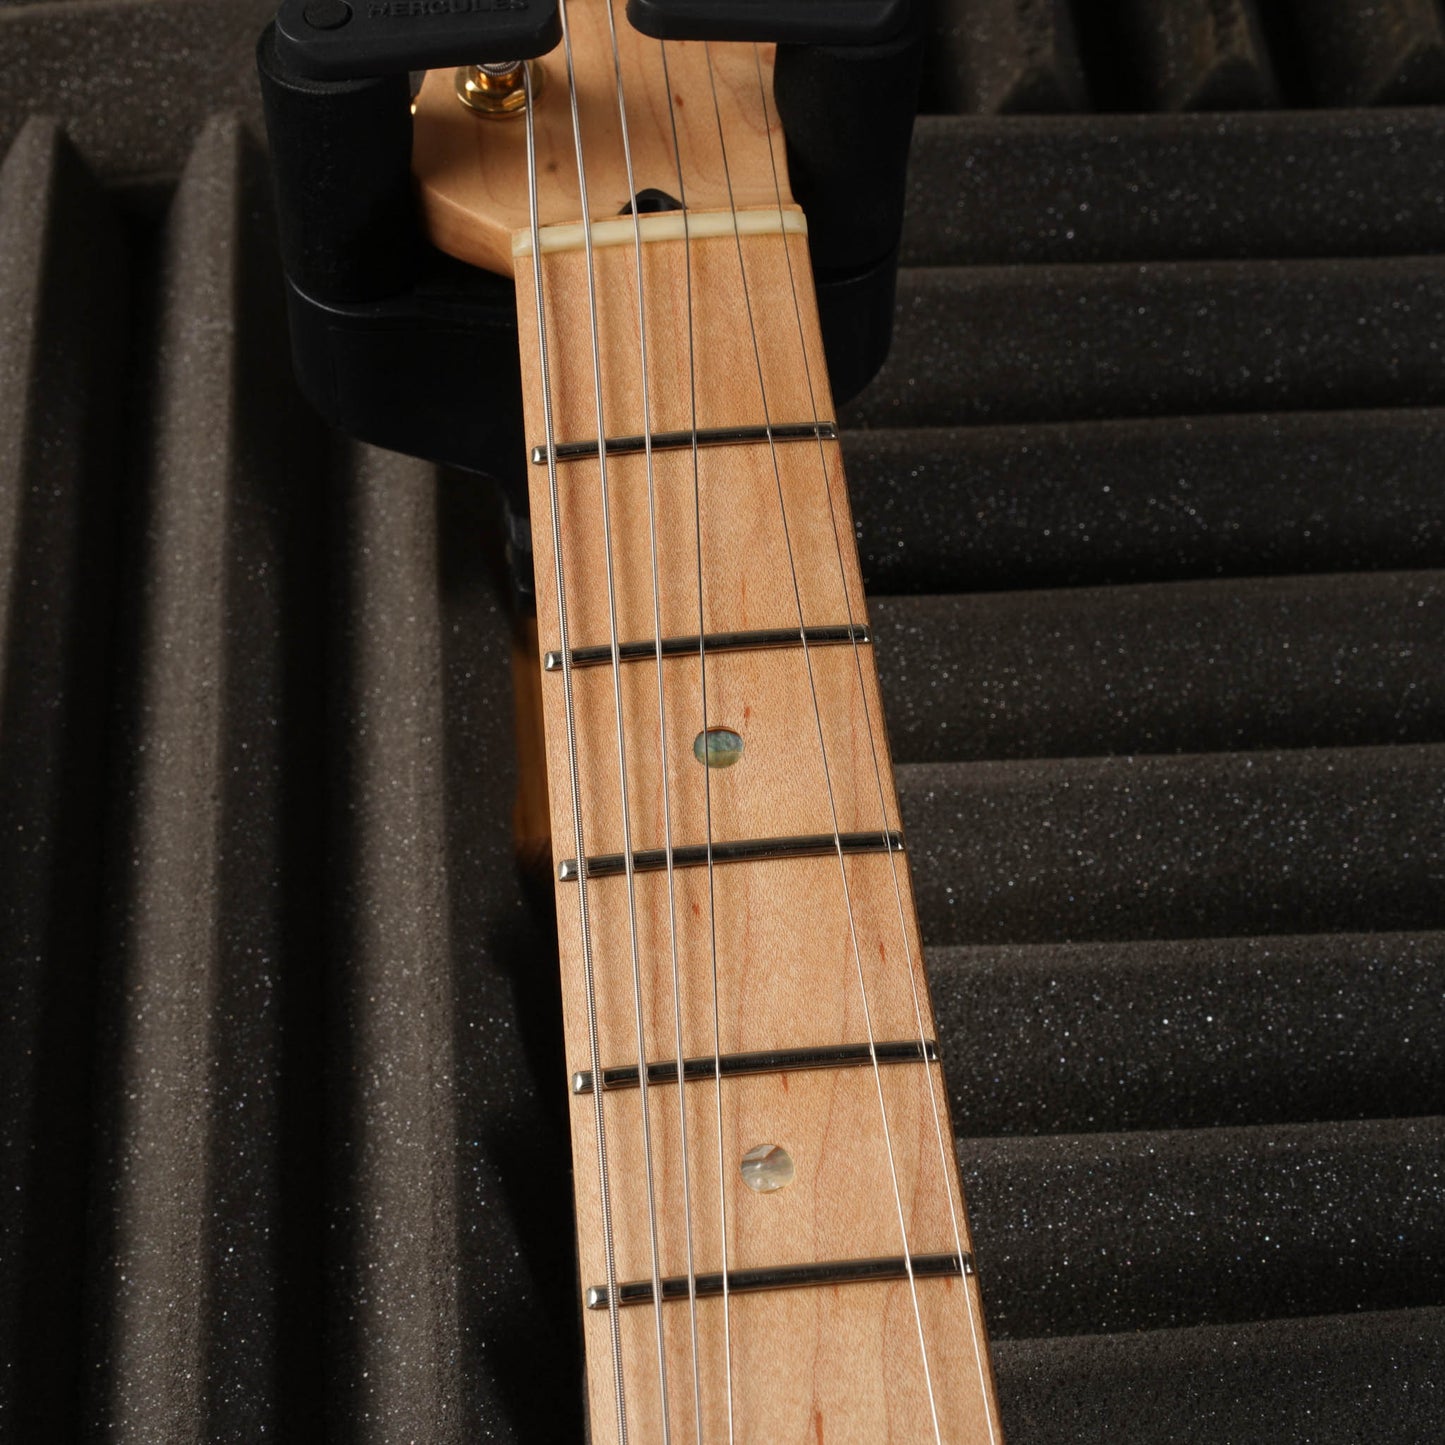 Fender Richie Kotzen Signature Telecaster MIJ 2013 - Brown Sunburst